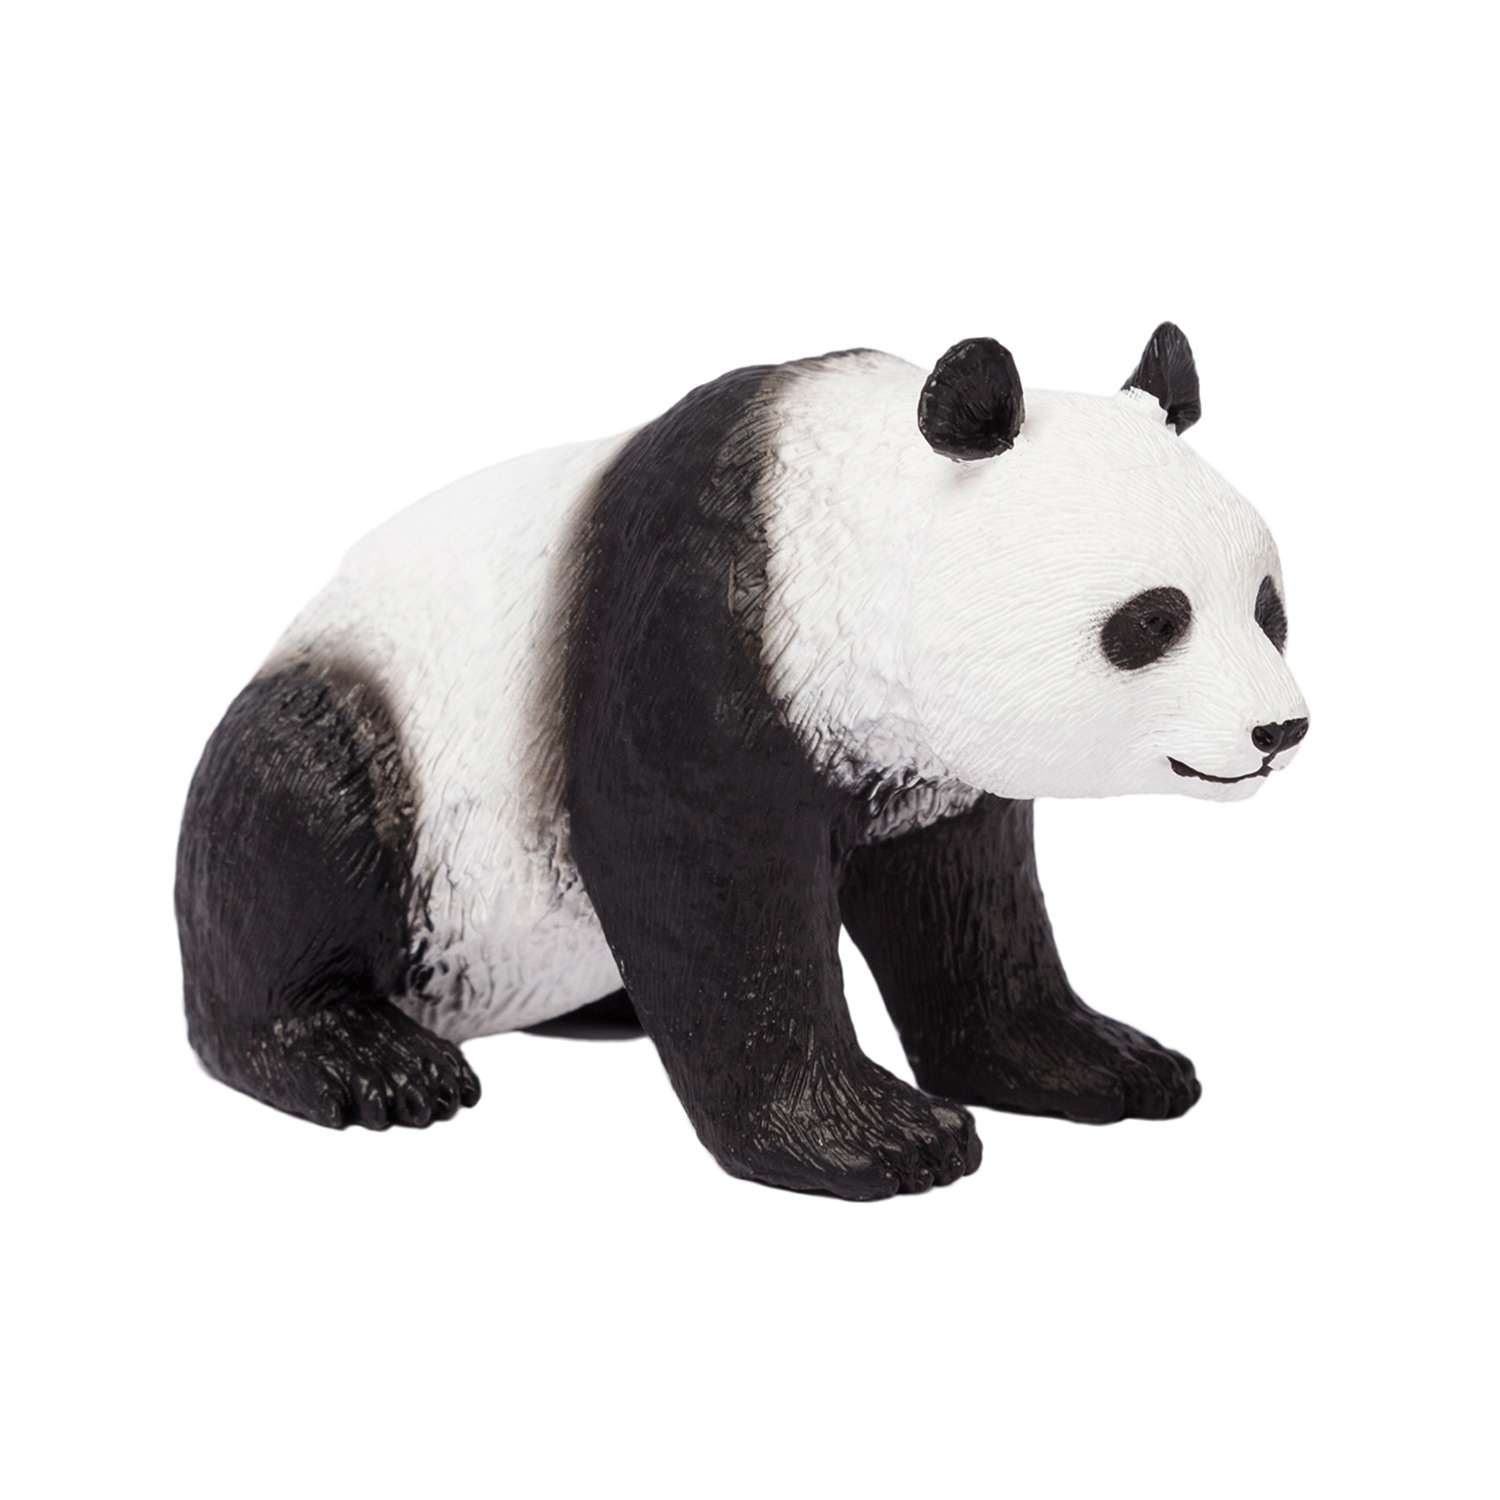 Панда линг. Фигурка "Панда". Панда Китай статуэтка. Schleich гигантская Панда самец 14772, 10 см. Mojo фигурка Wildlife гигантская Панда 387171p.